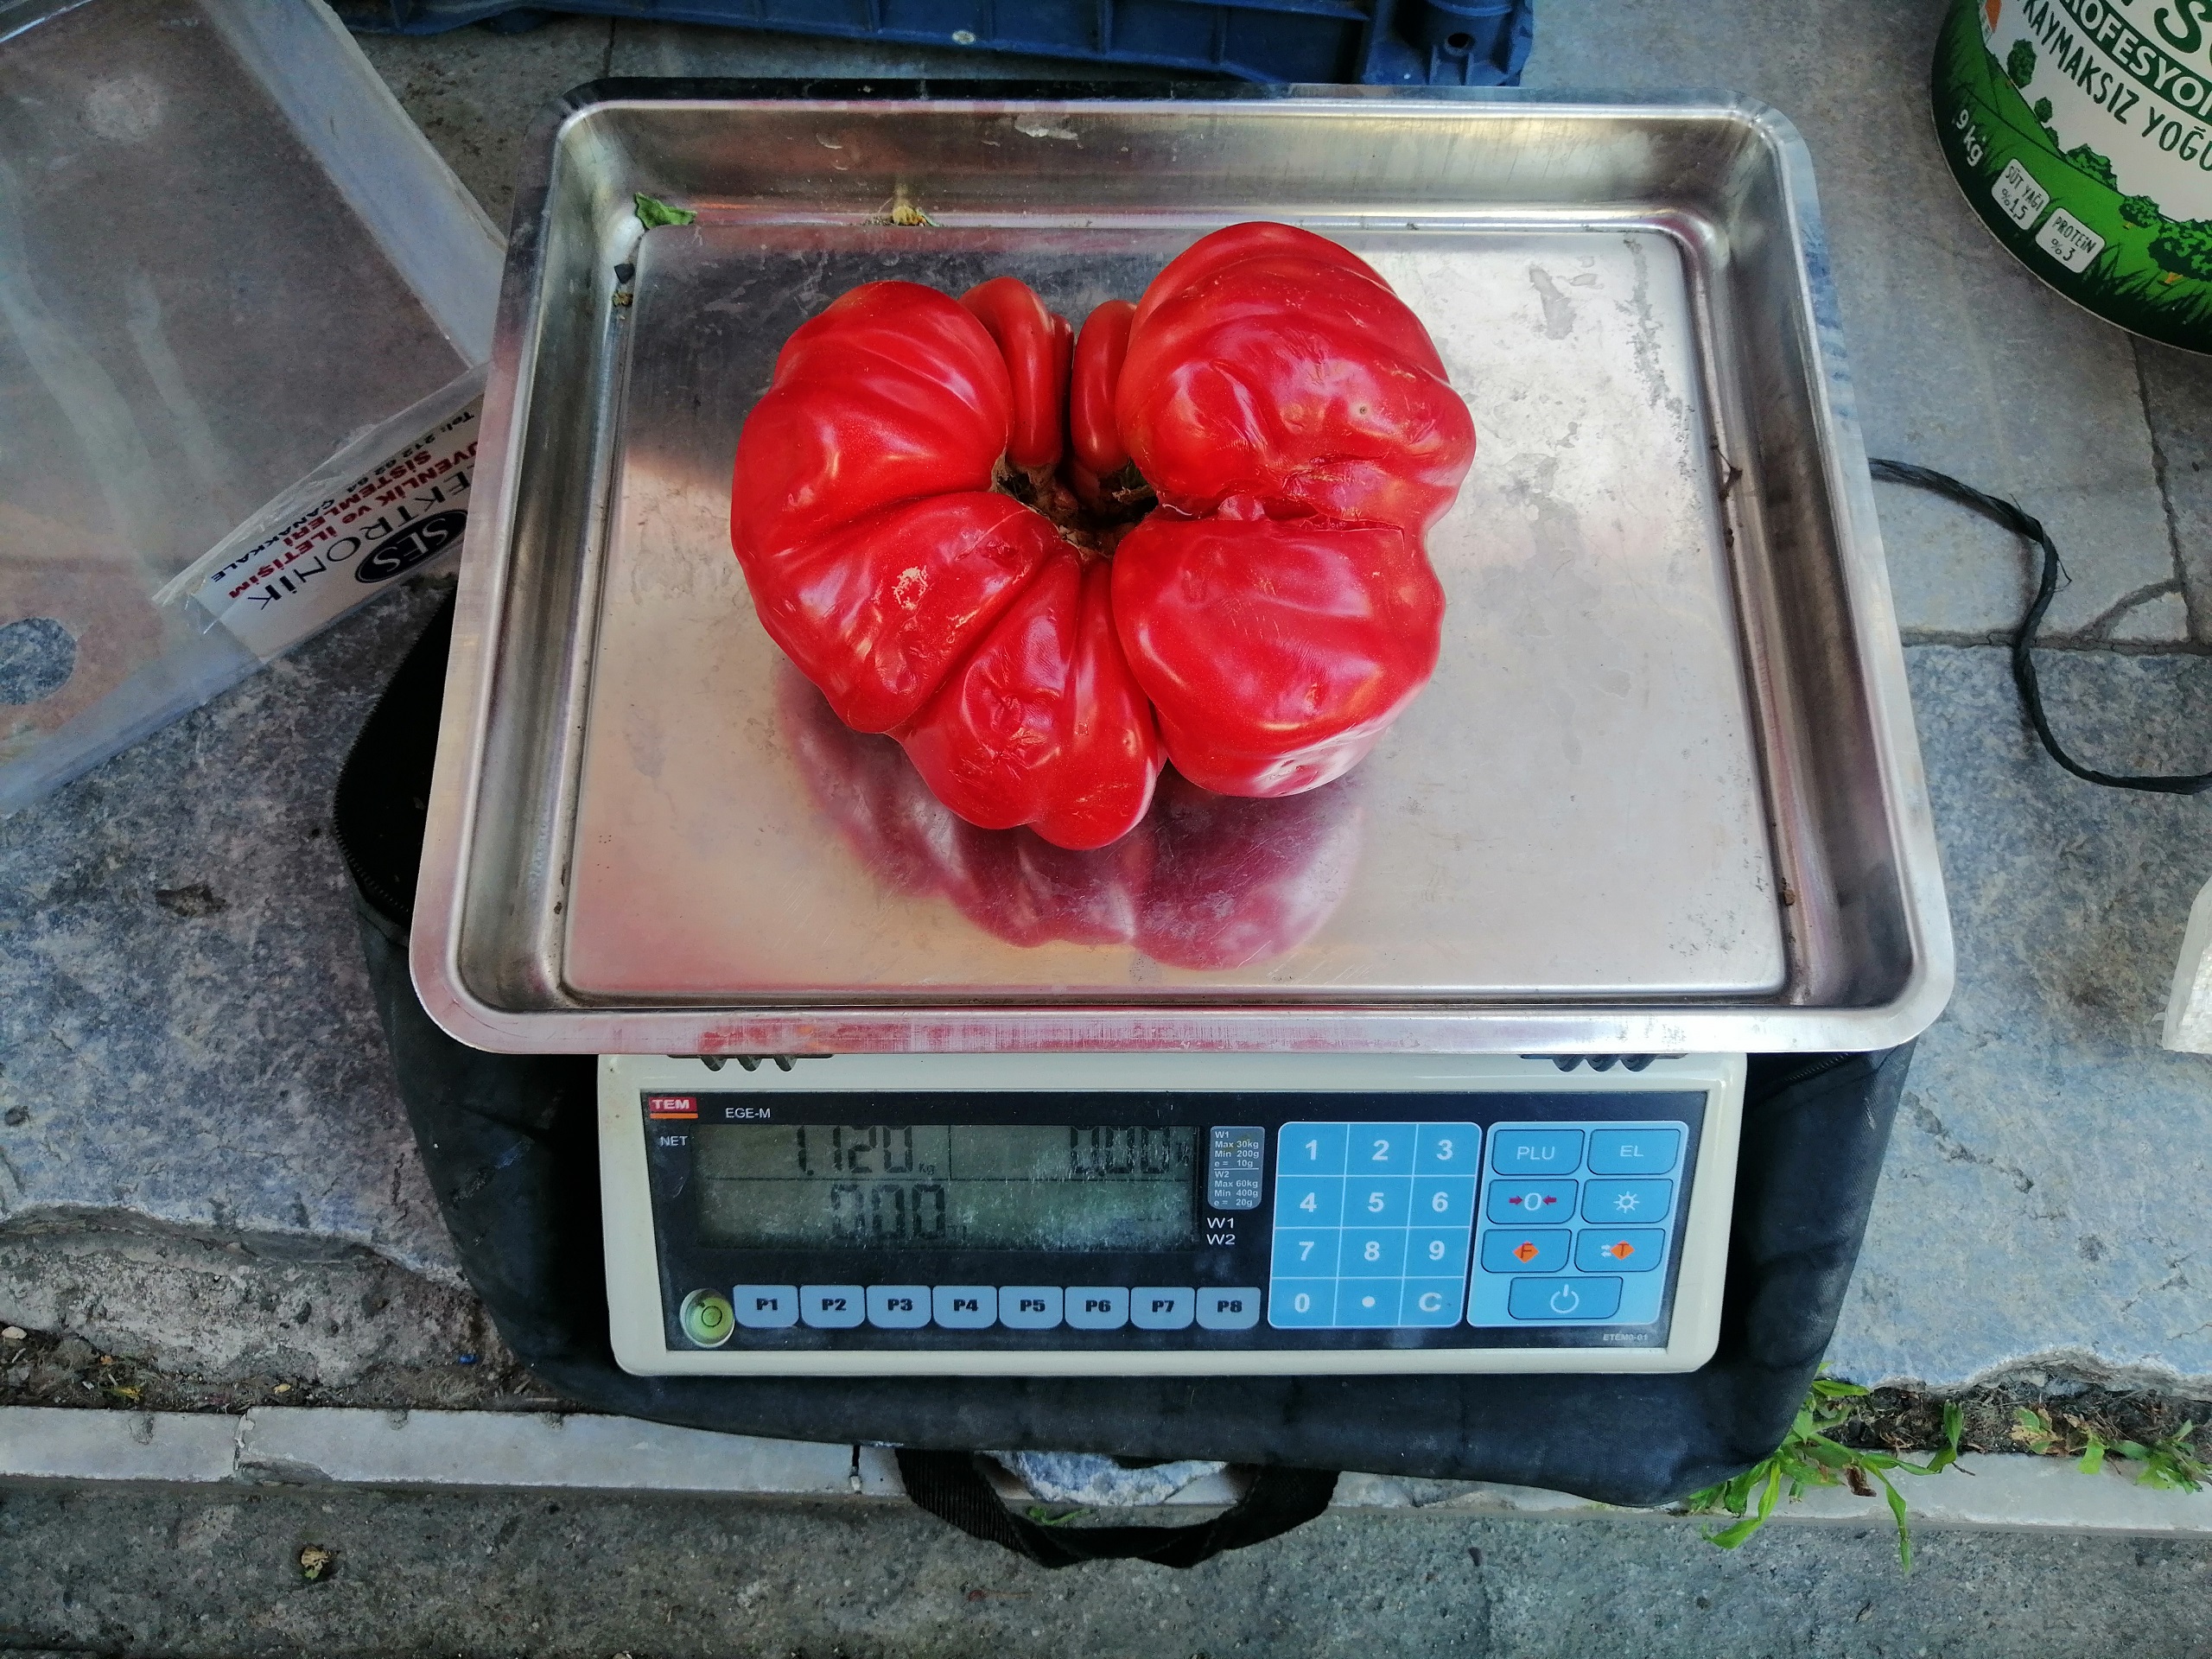 canakkalede-yetisen-1-kilo-120-gramlik-domates-buyukluguyle-sasirtti-4962-dhaphoto4.jpg